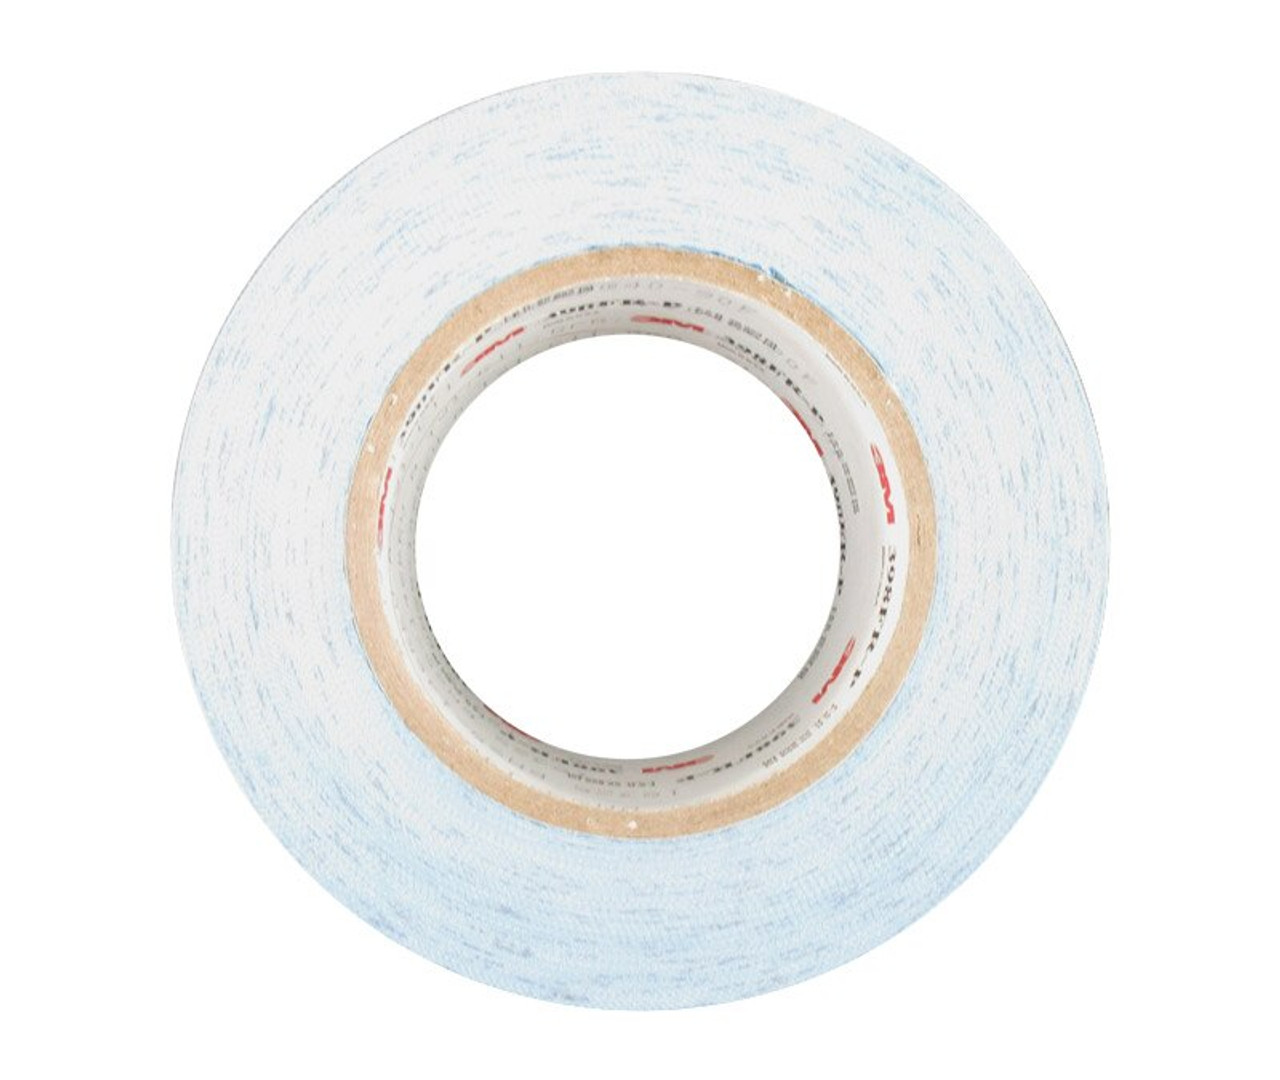 3M 398FR Cloth Tape 96672, 2 in x 36 yd, White